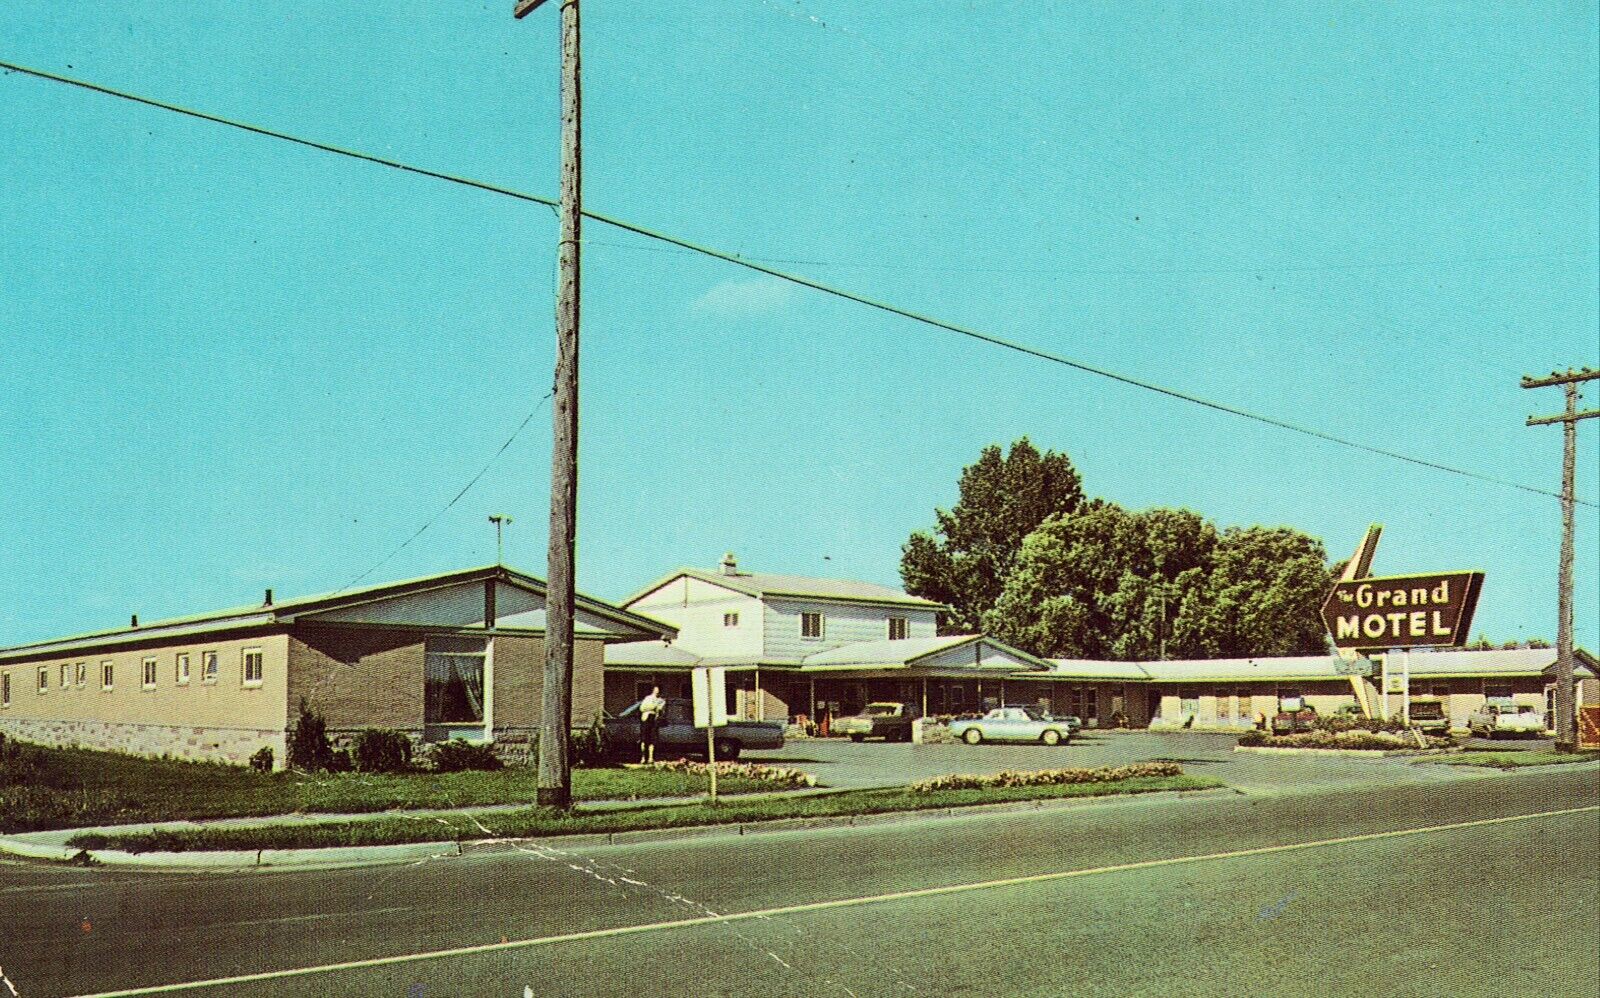 Grand Motel - Sault Ste. Marie, Michigan Vintage Postcard